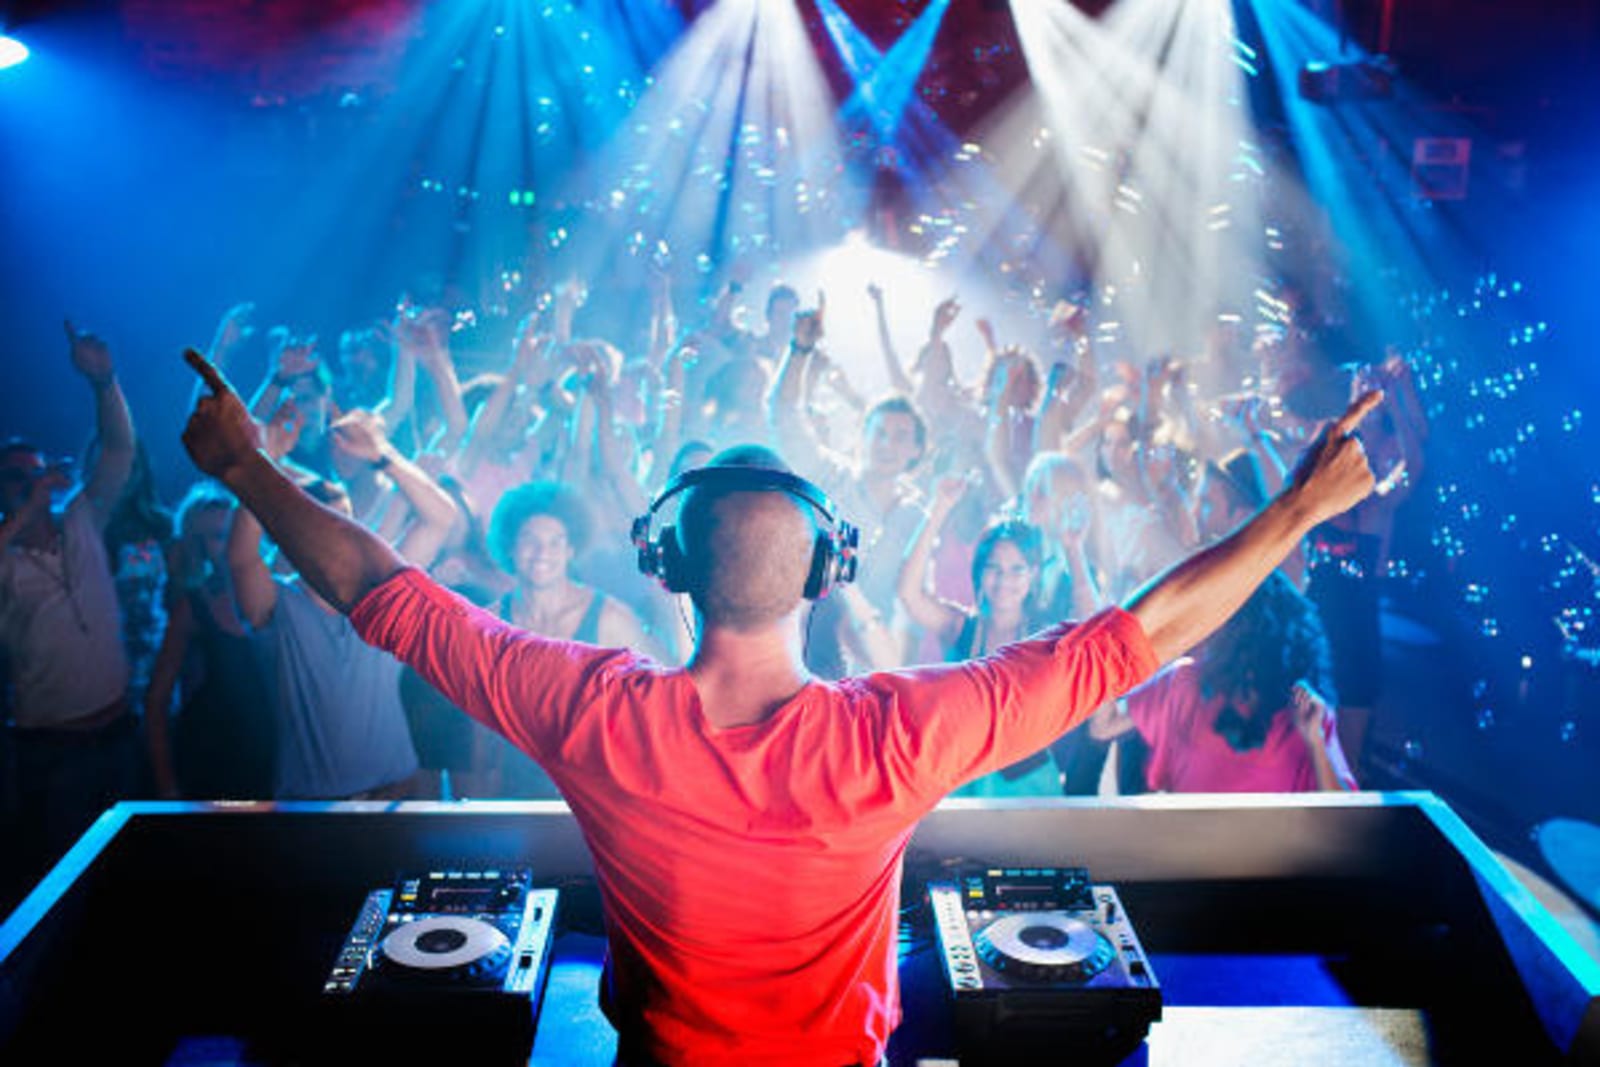 DJ in a red shirt under stagelights